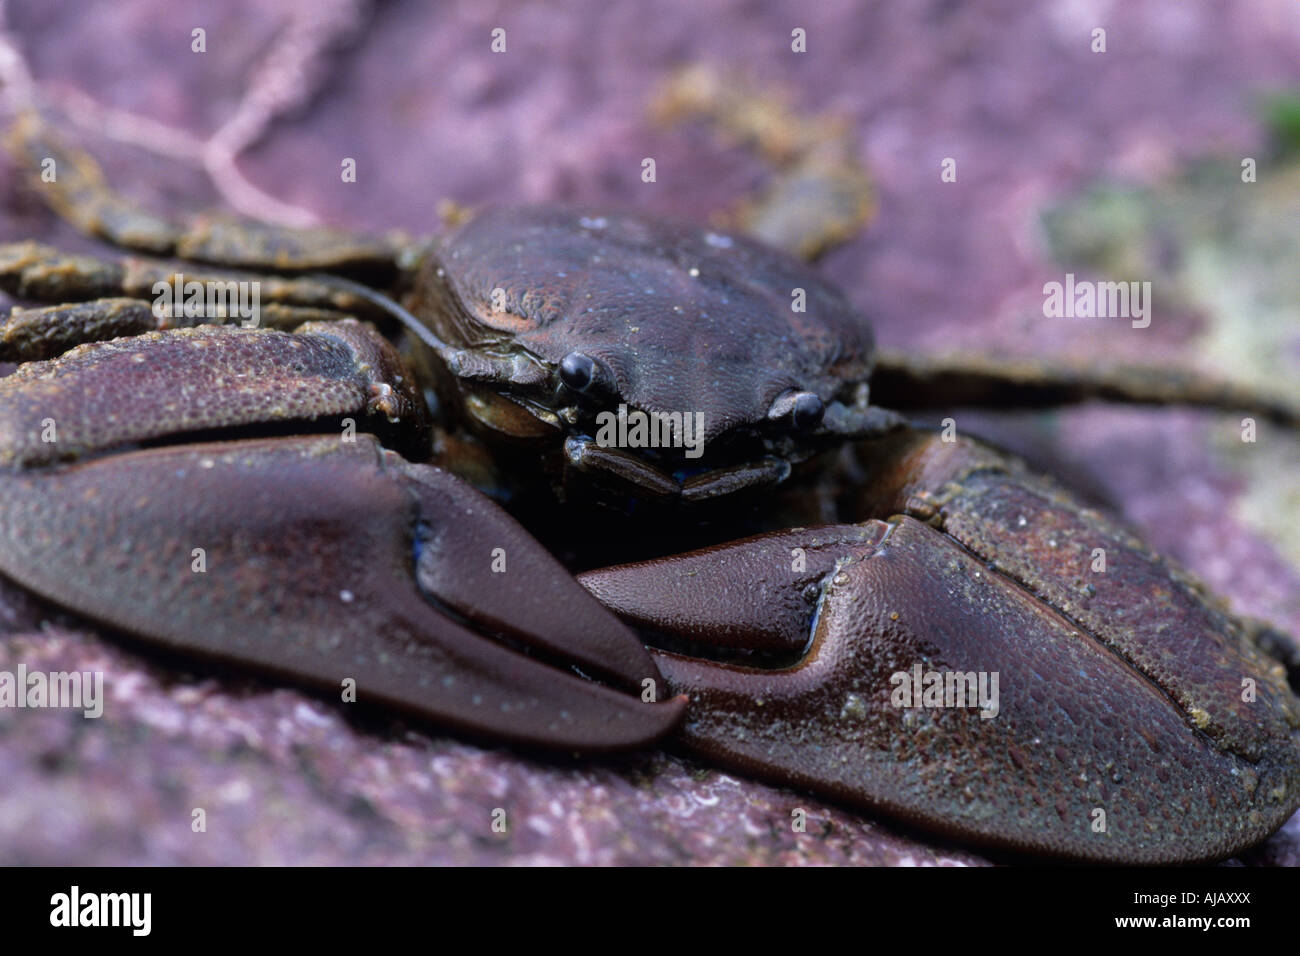 Porcelain crab (Petrolisthes sp.) Stock Photo